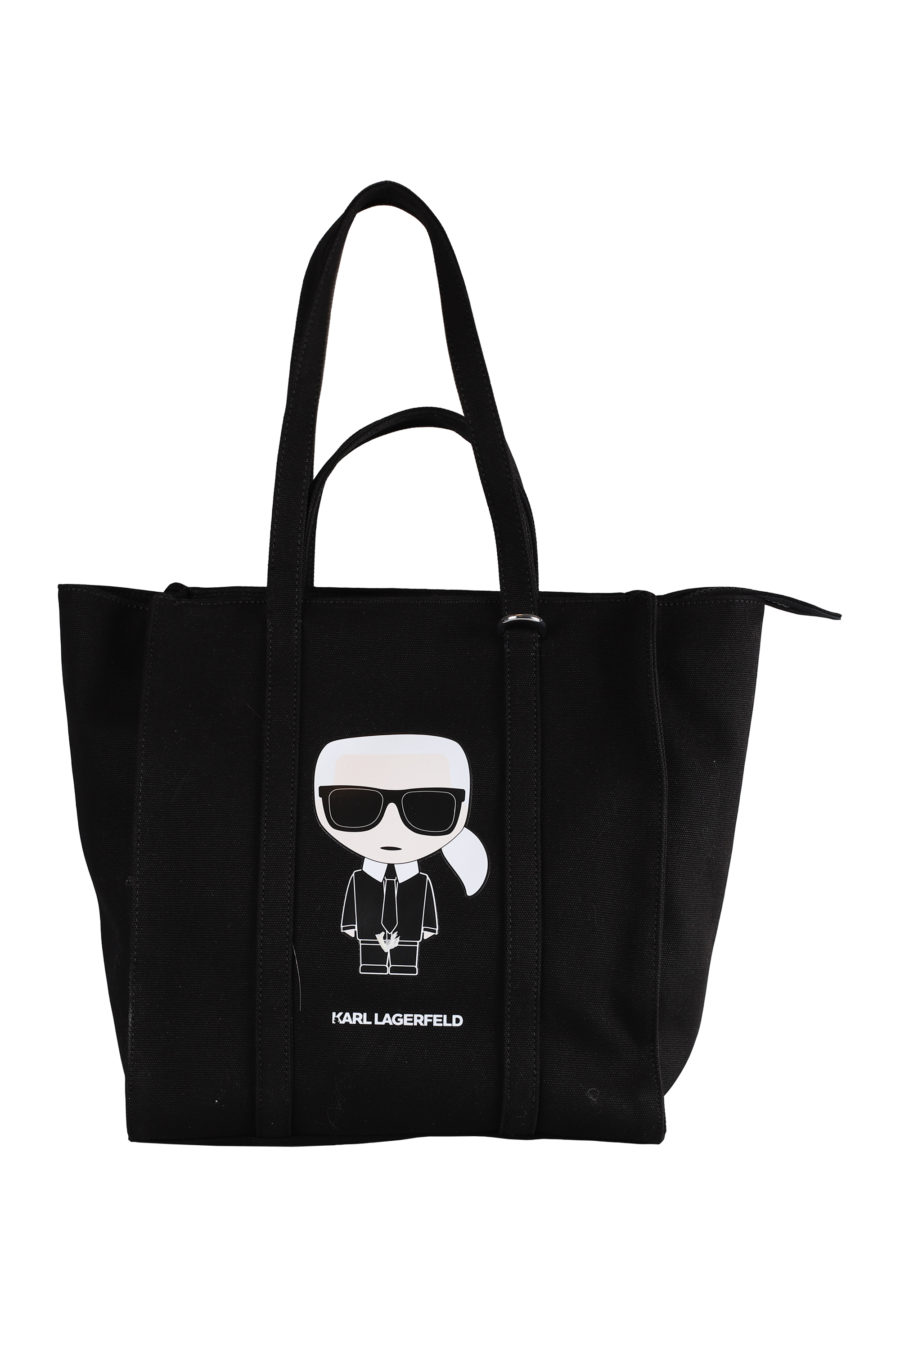 Black tote bag with "Karl" logo - IMG 9741